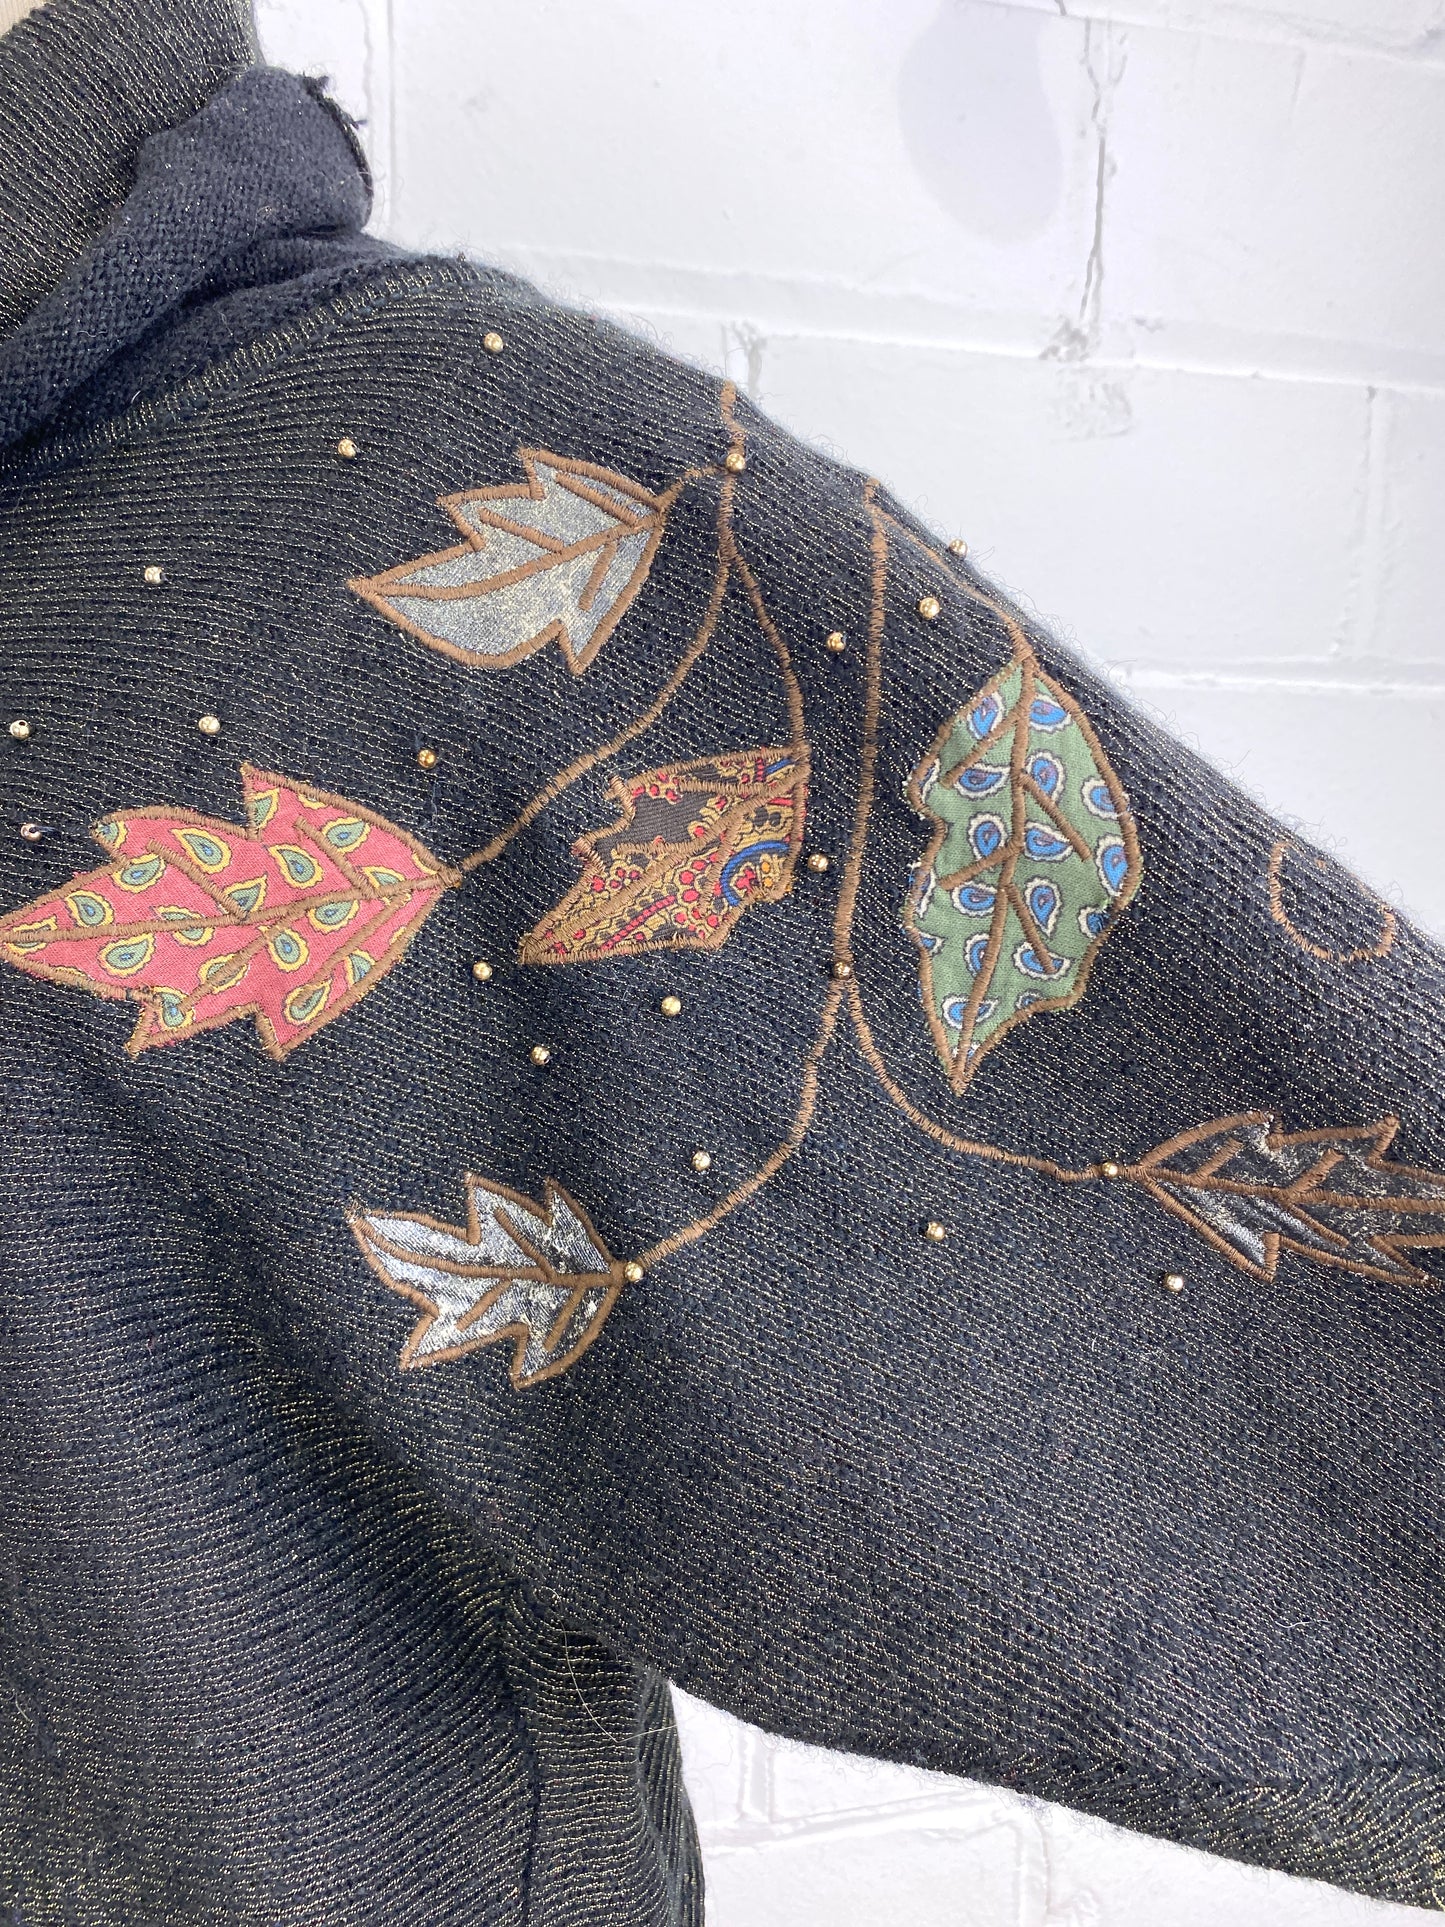 Vintage 1980s Black & Gold Cowl Neck Sweater with Leaf Appliqué, Medium 